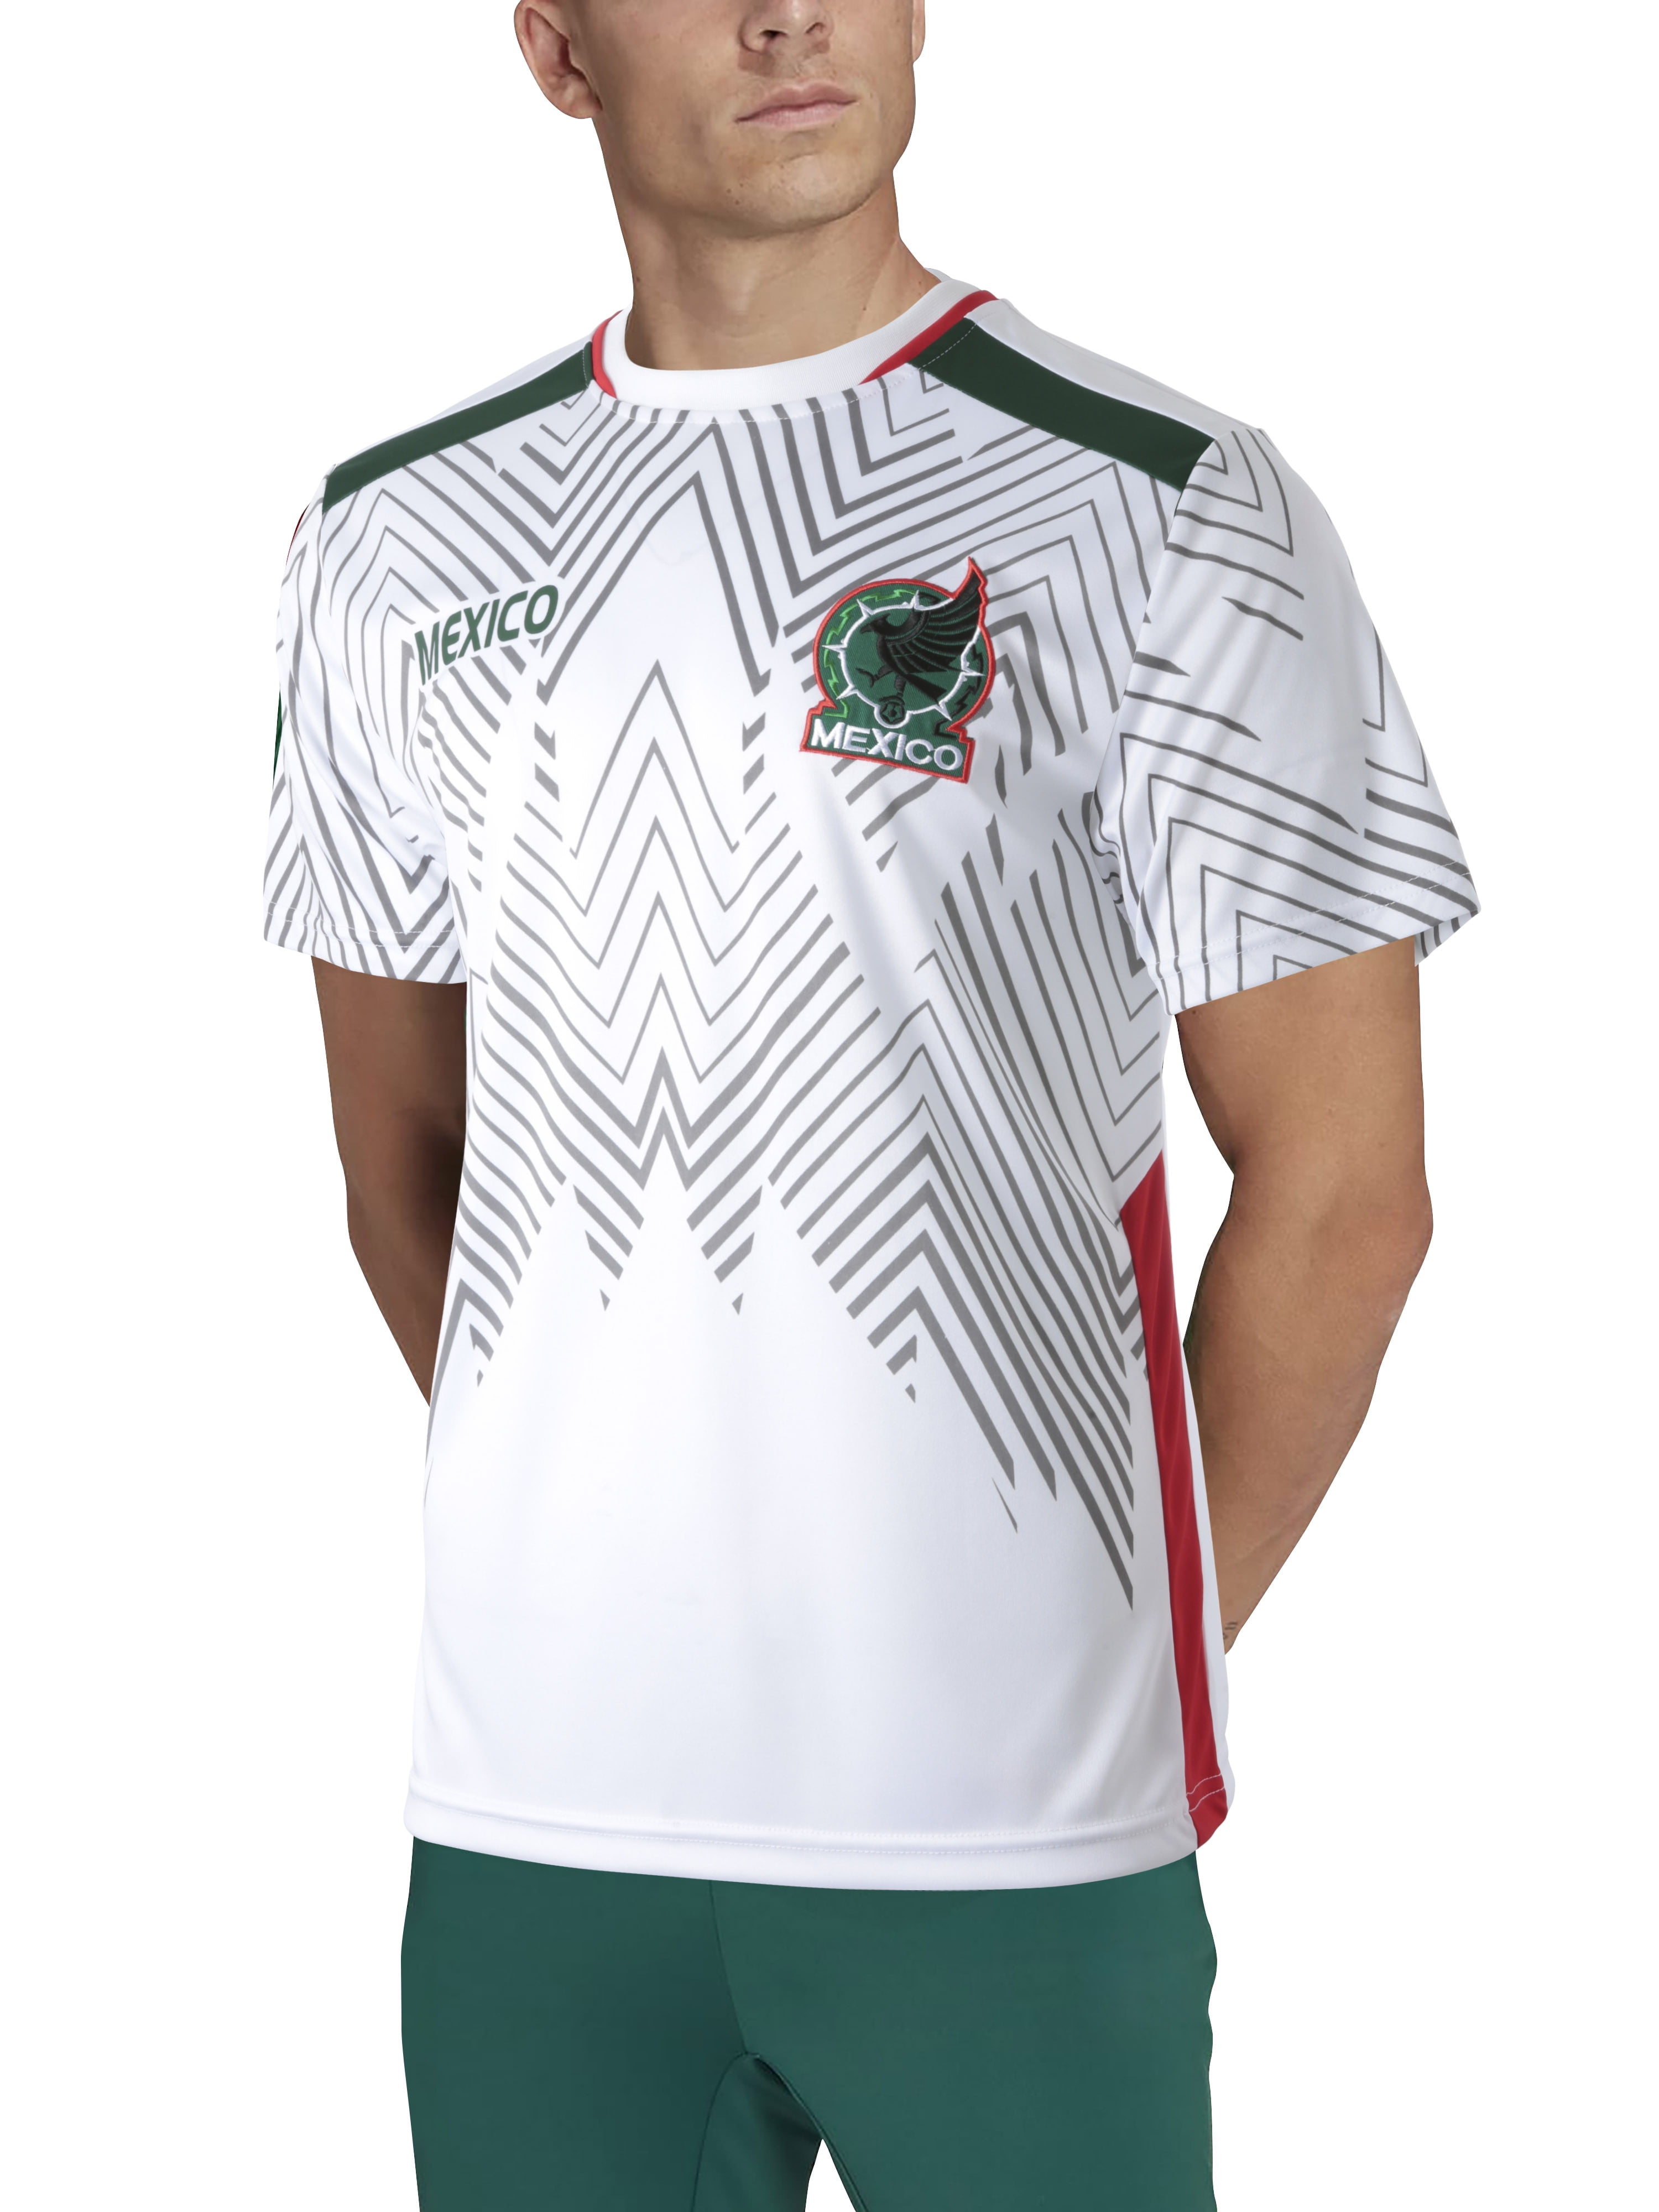 Mexico Jersey, Mexico Soccer Gear, Mexican National Team Shop & El Tri  Store